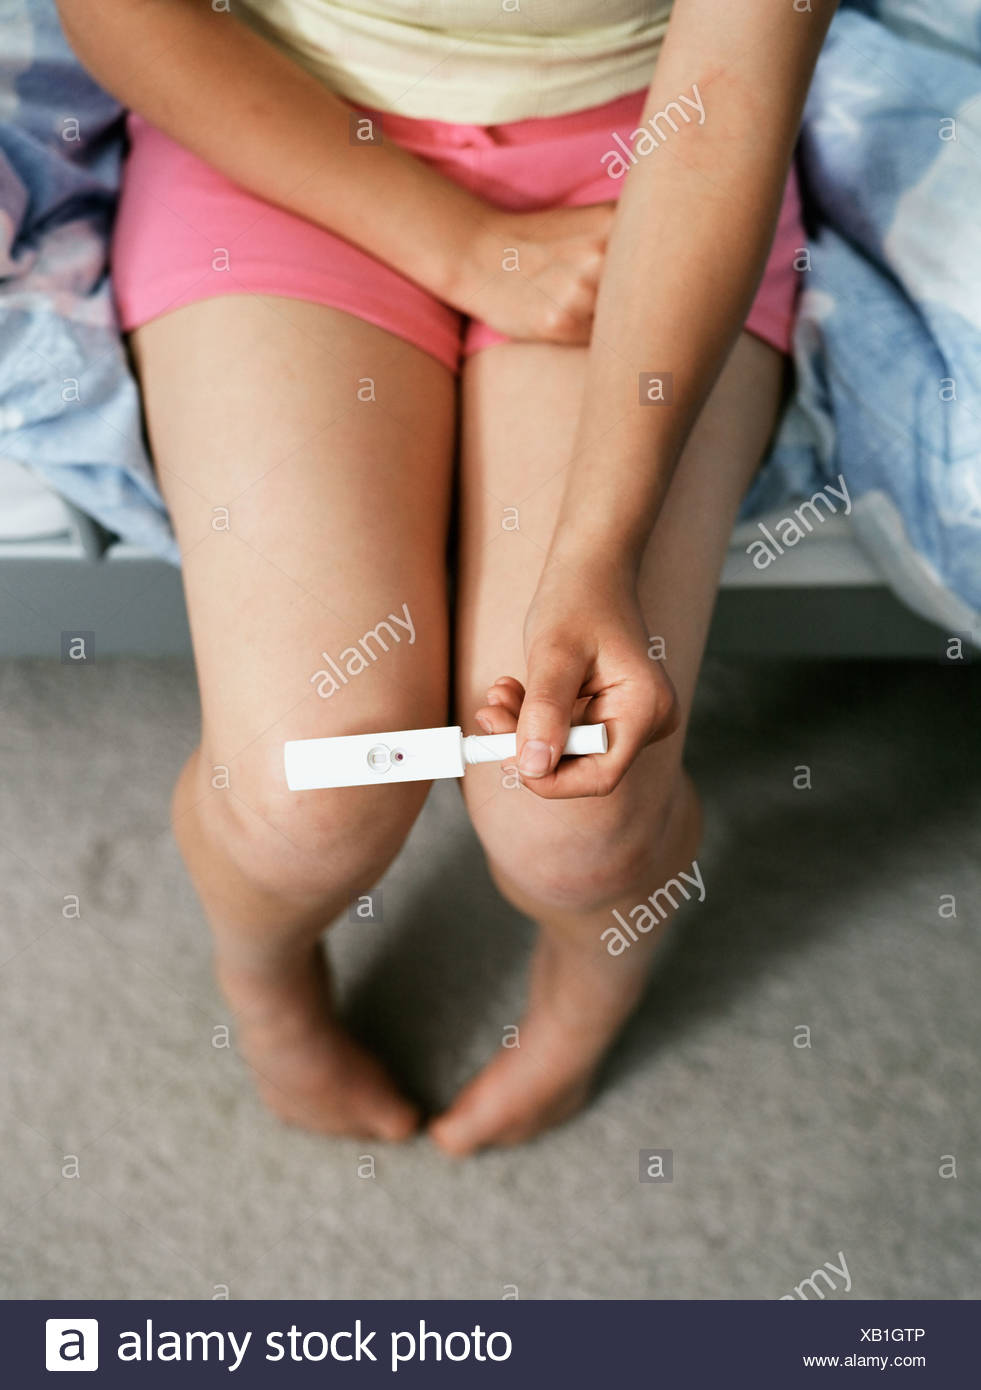 teenage-girl-holding-pregnancy-test-XB1GTP.jpg